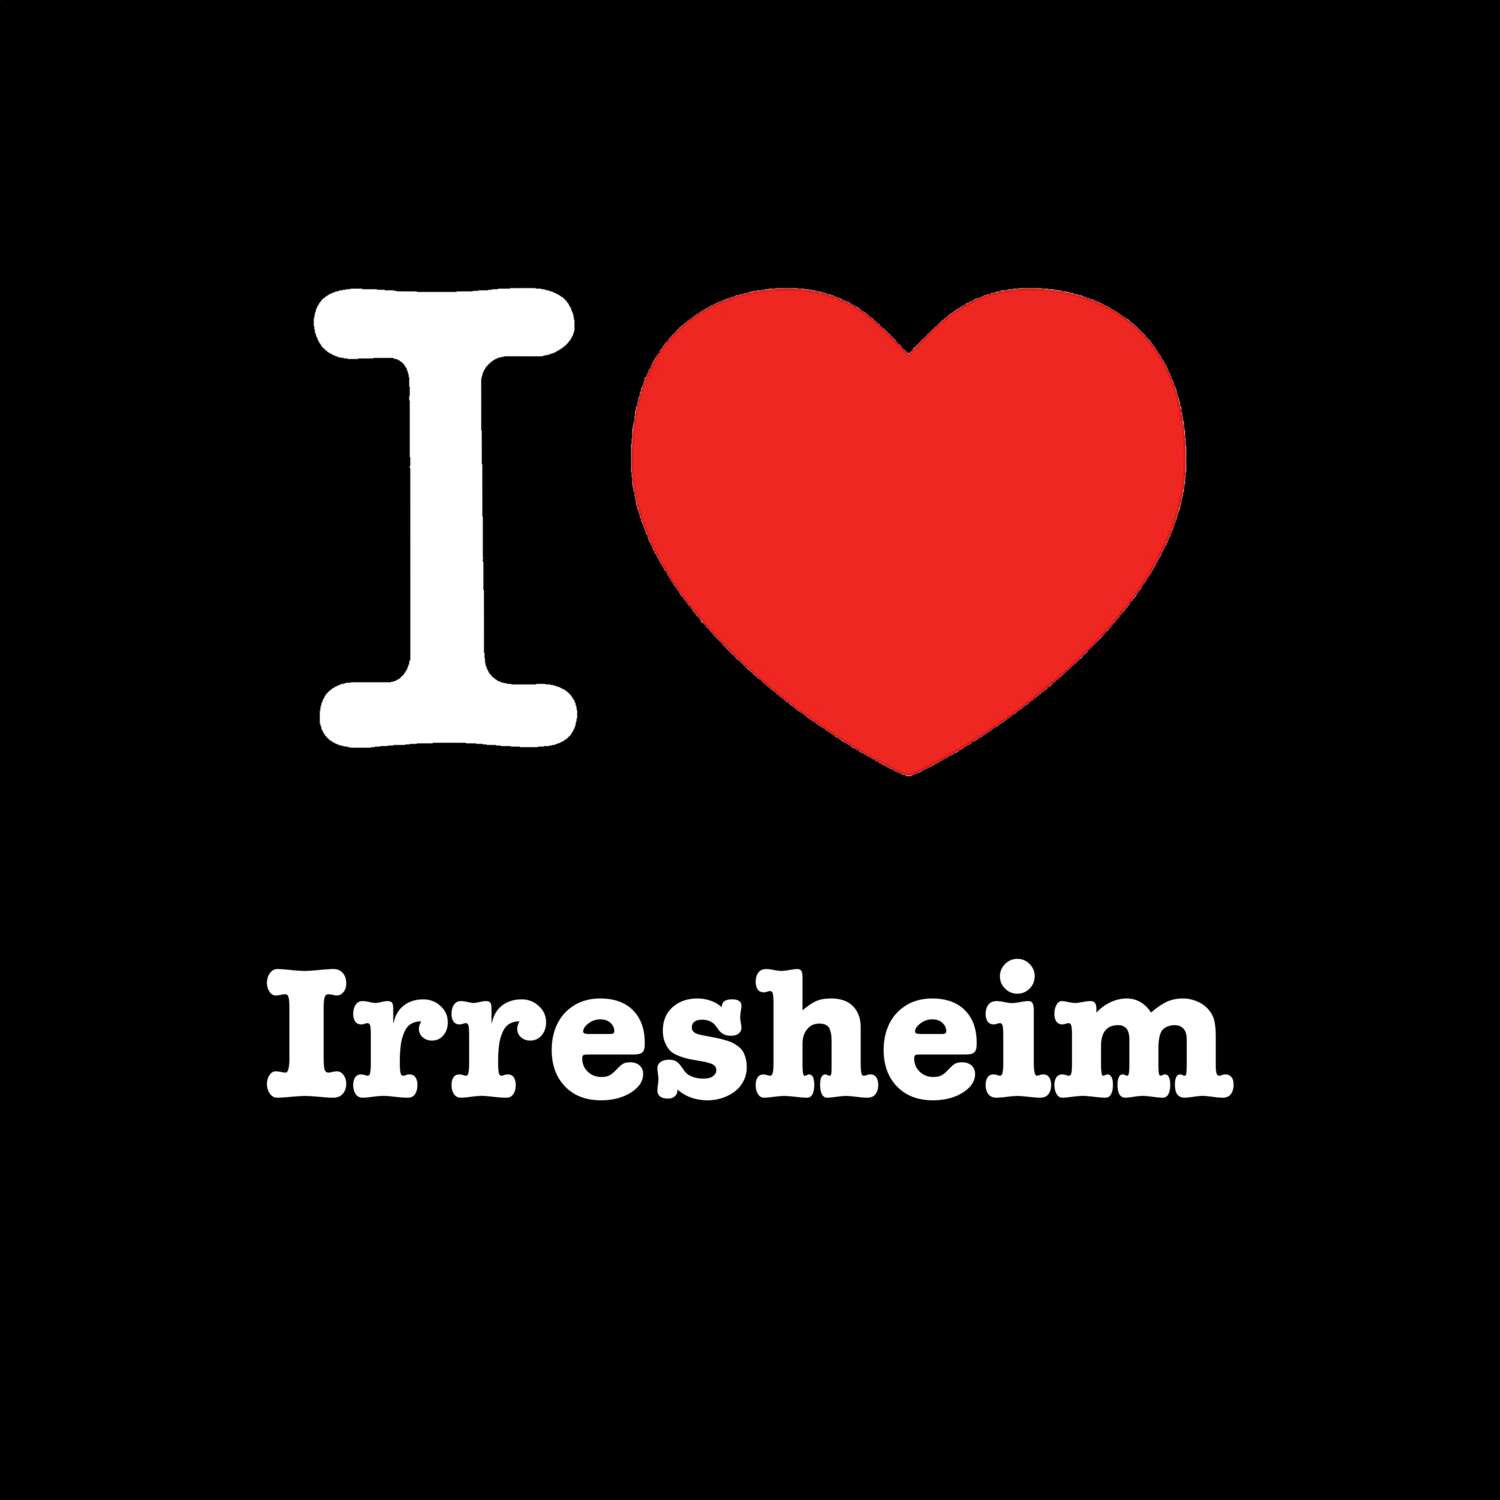 Irresheim T-Shirt »I love«